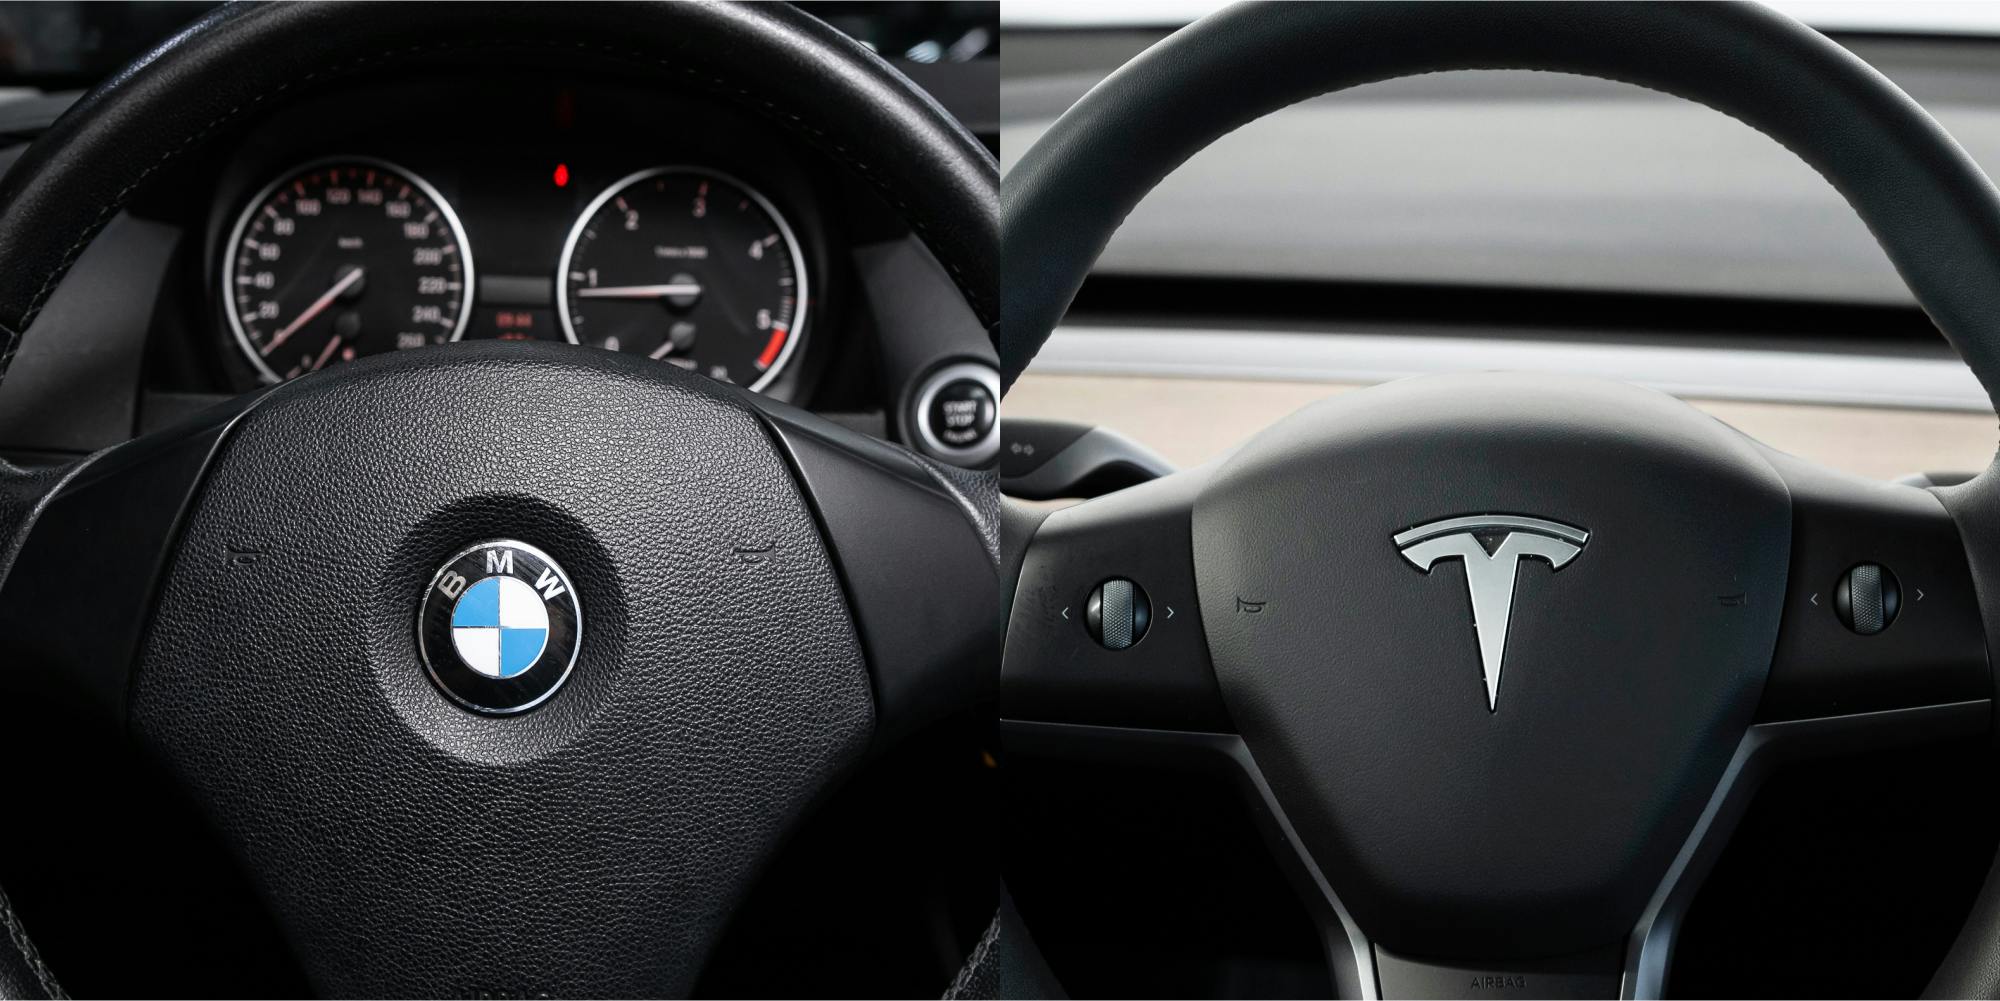 BMW steering wheel with logo (l) Tesla steering wheel with logo (r)